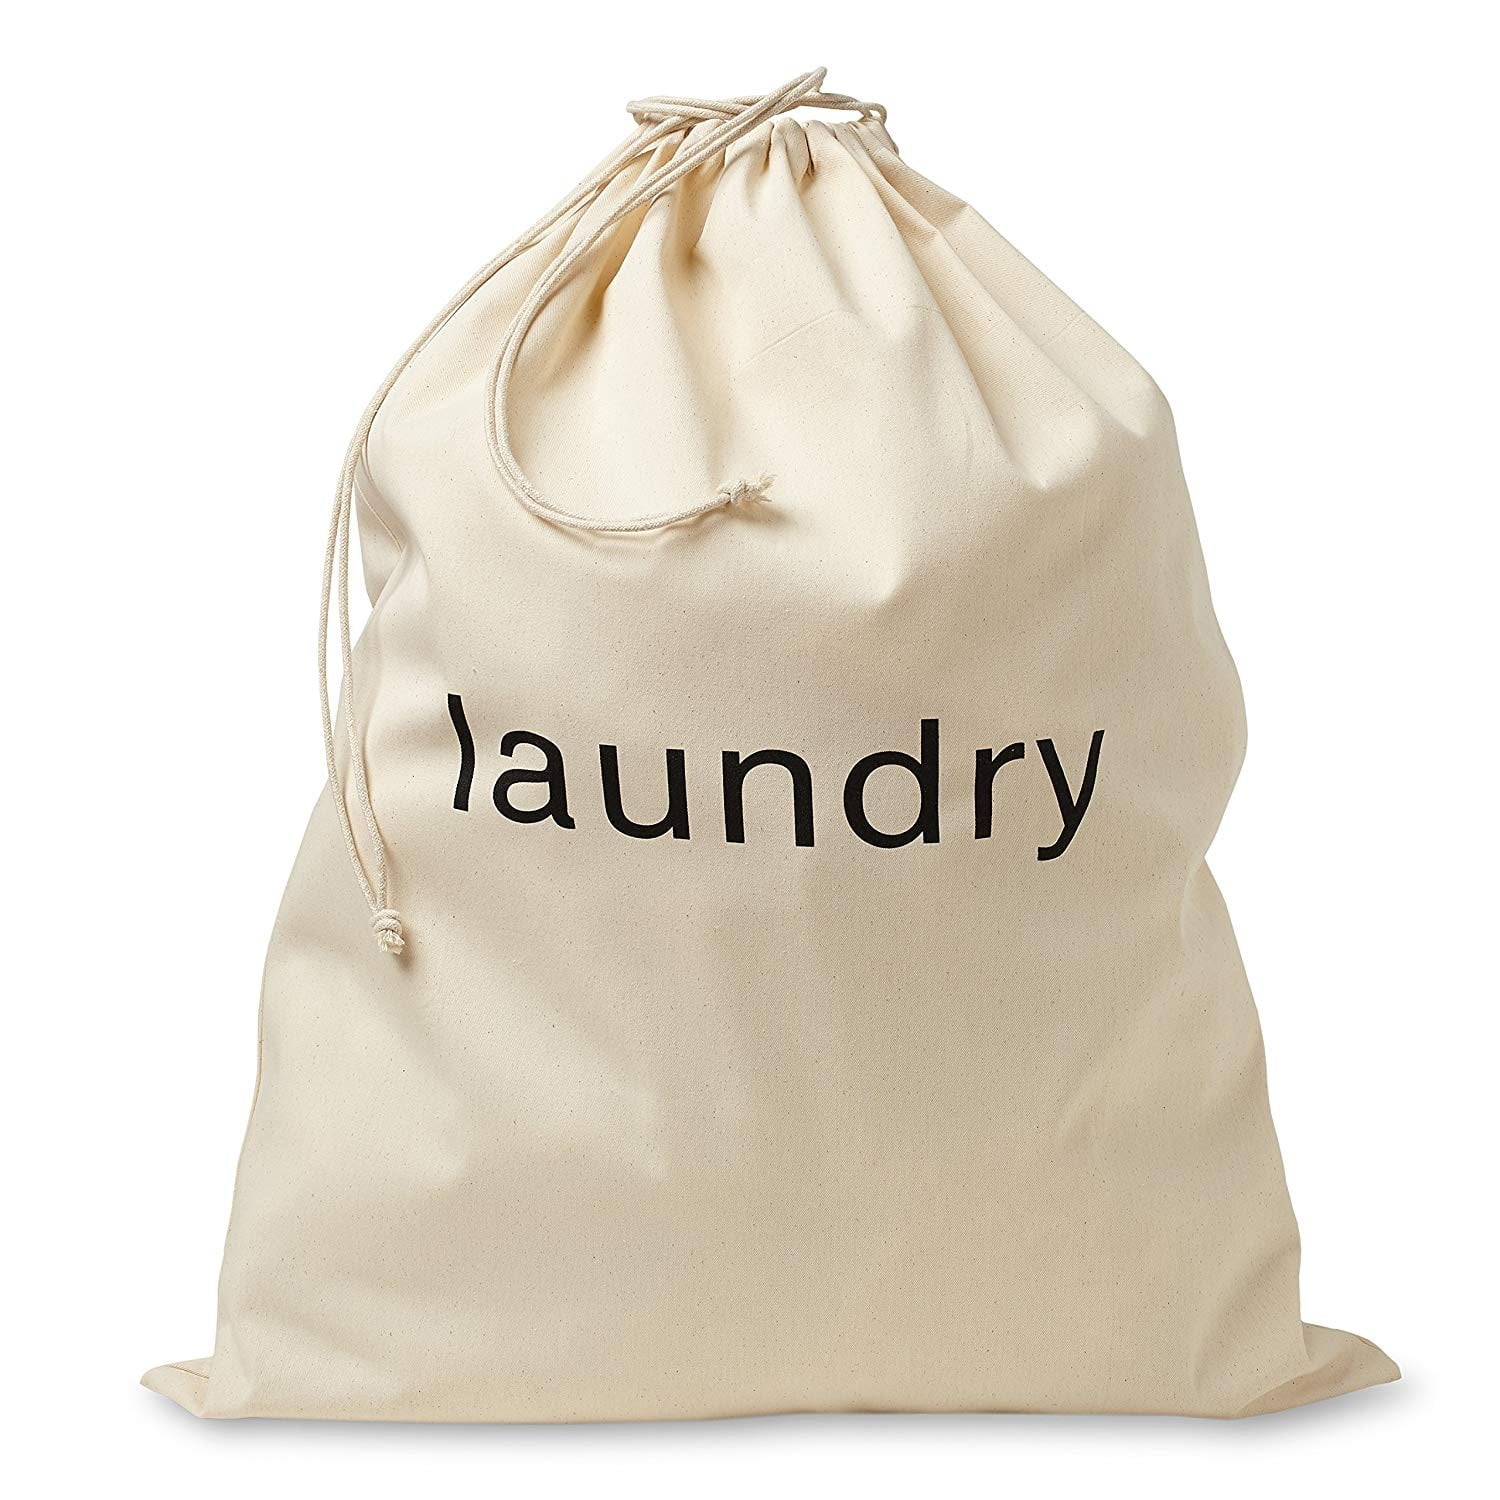 laundry travel drawstring bag